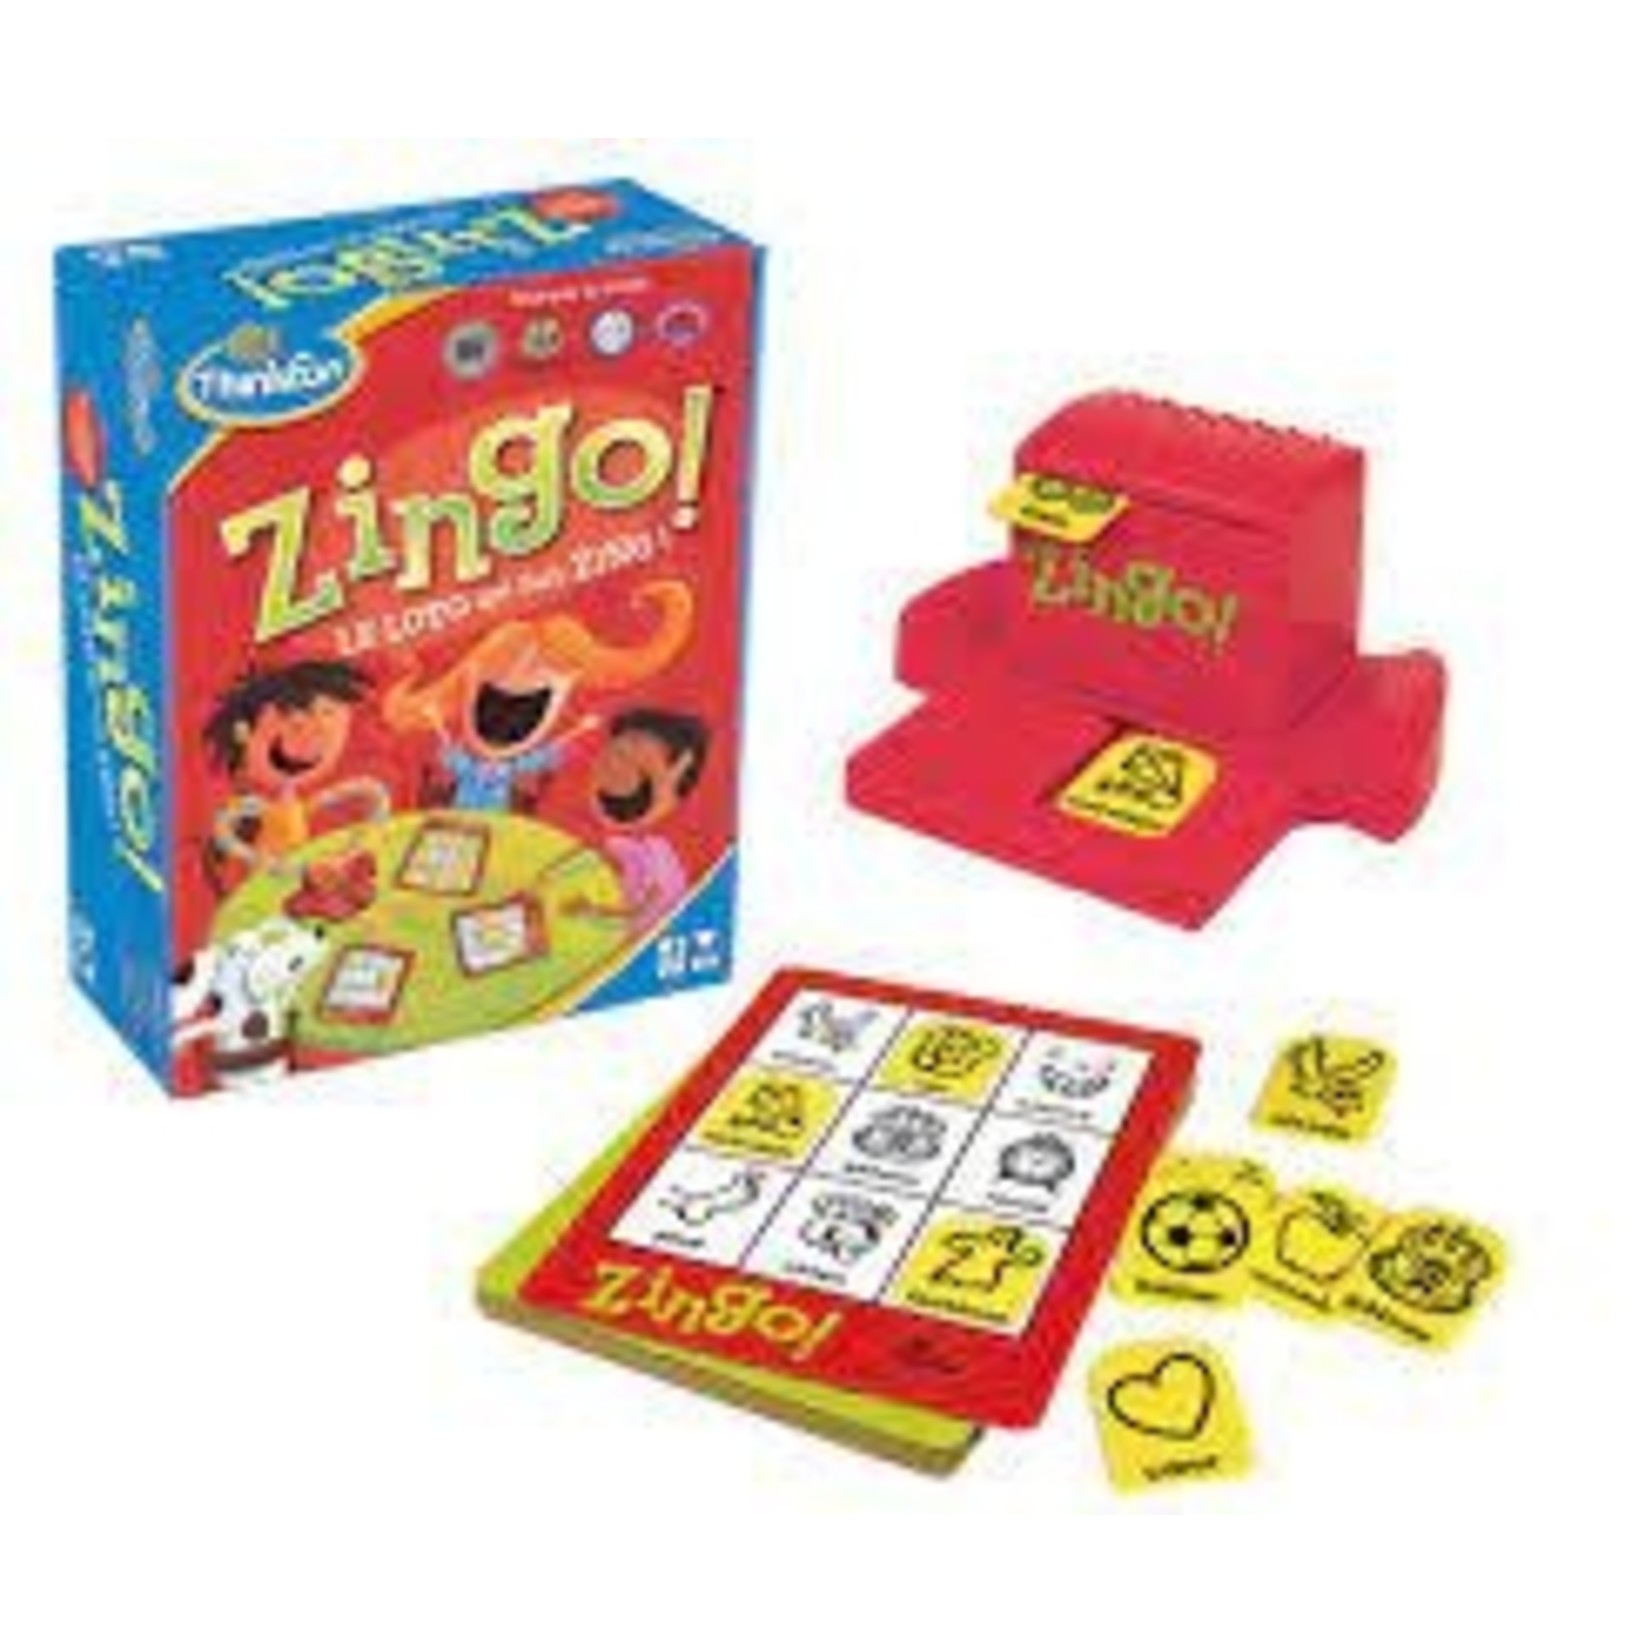 ZINGO (FRENCH) GAME